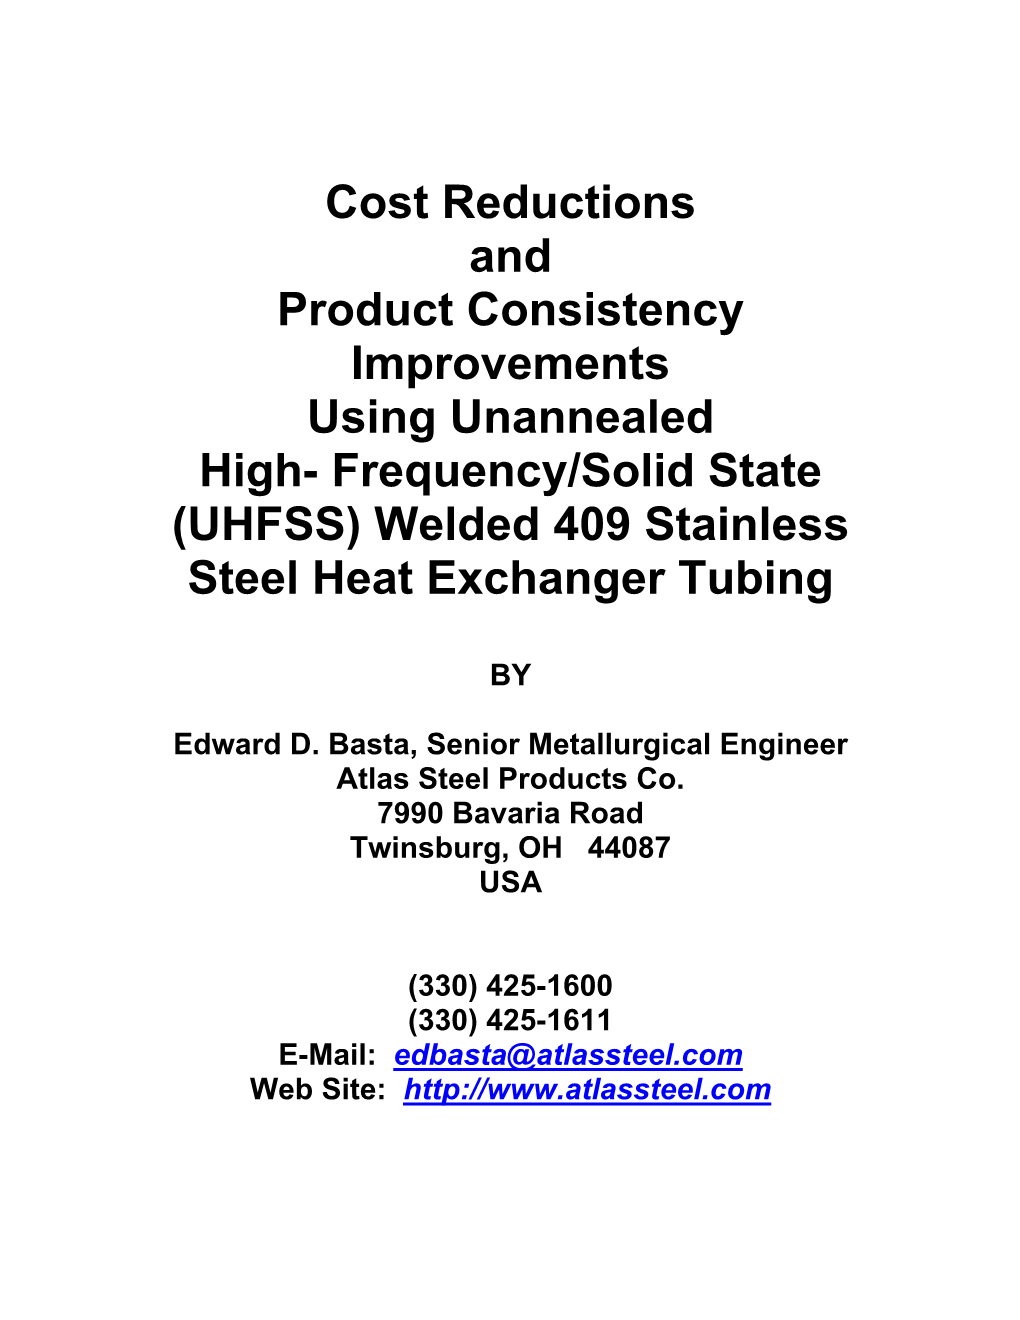 (UHFSS) Welded 409 Stainless Steel Heat Exchanger Tubing